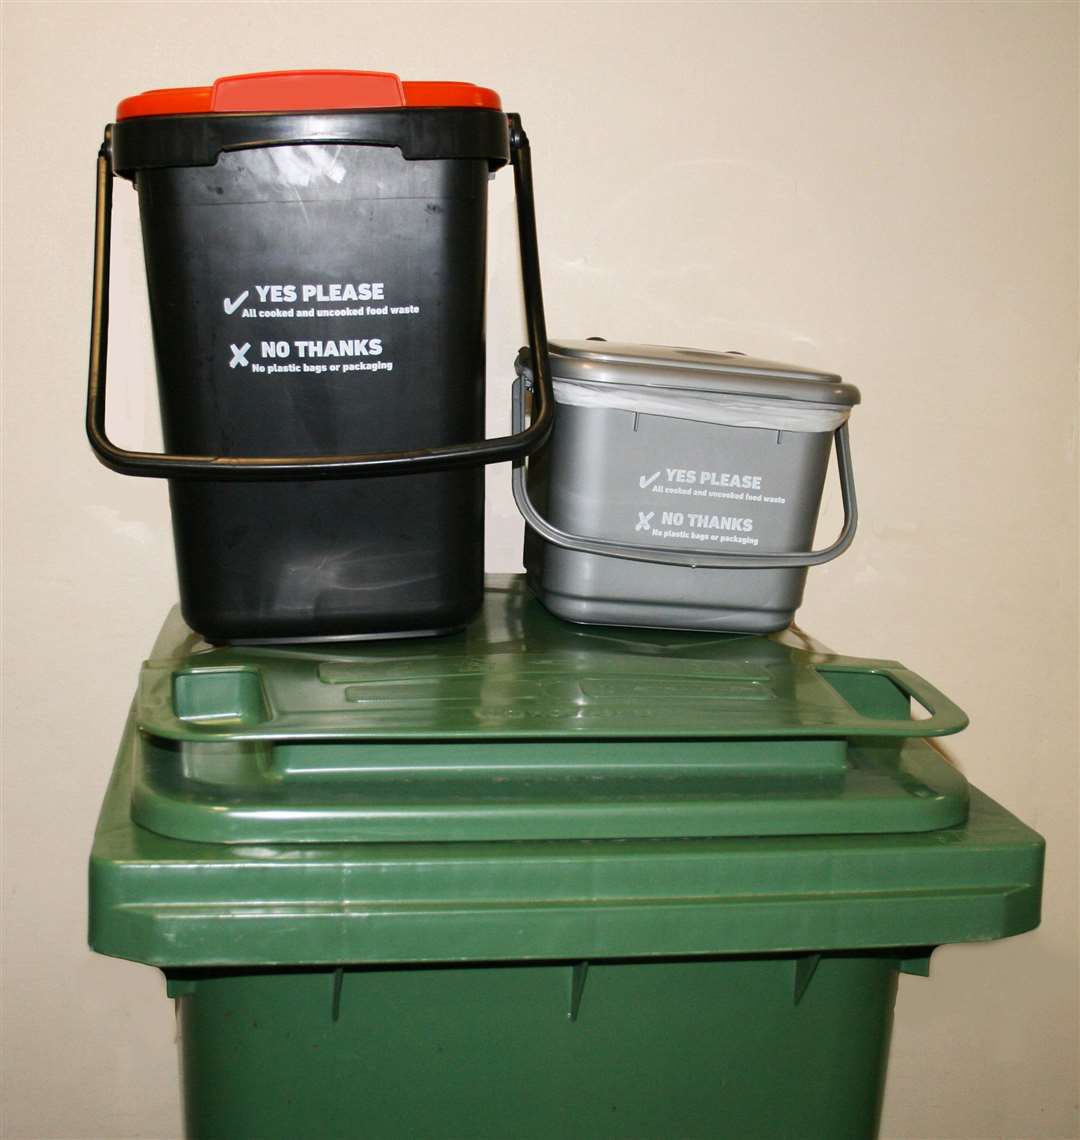 Food waste bins for Swale homes